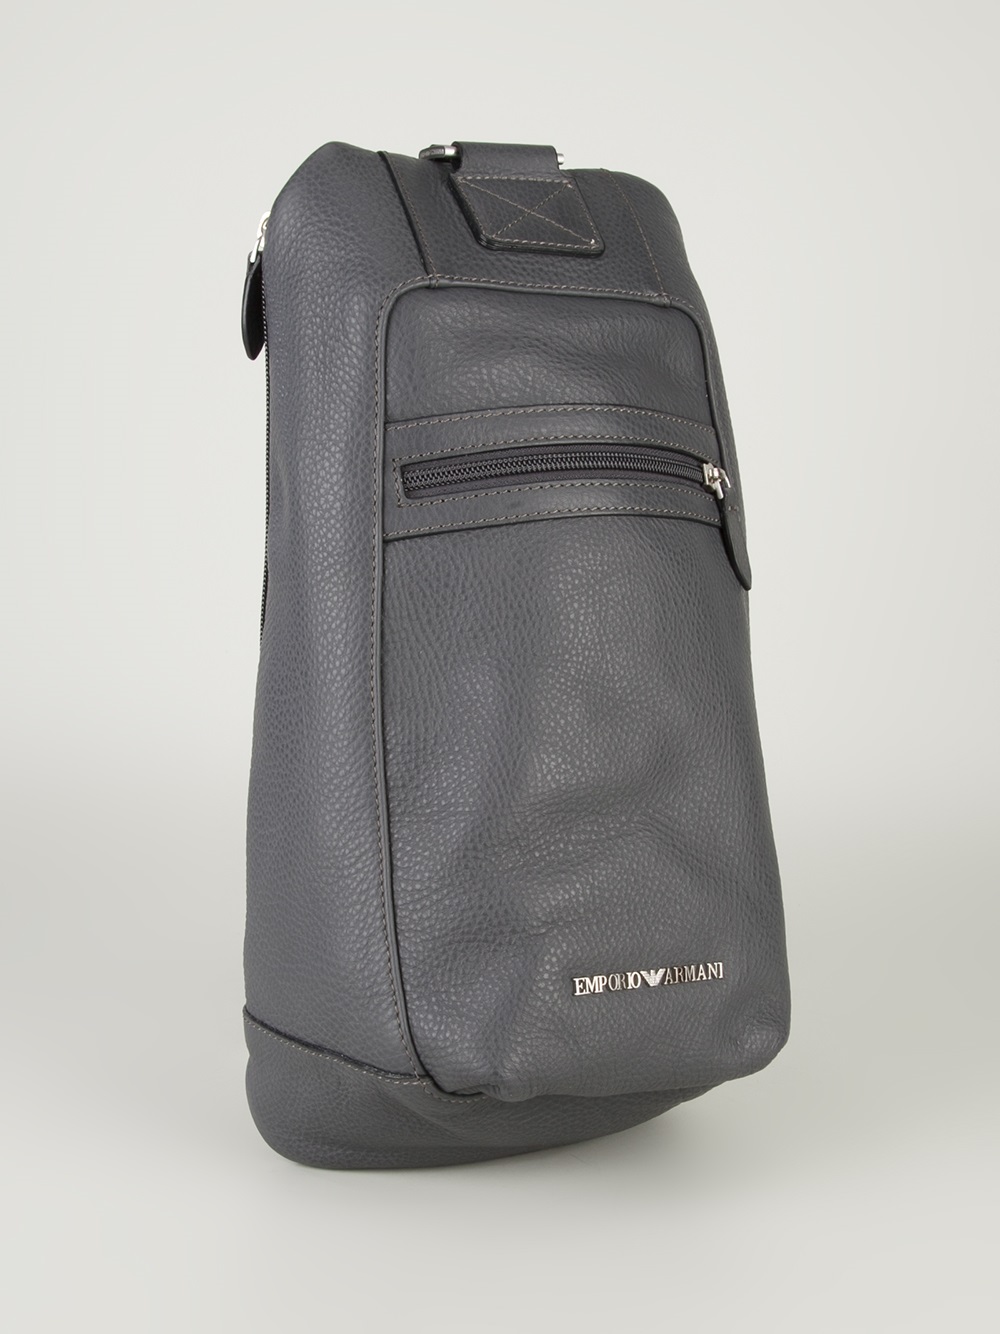 Emporio Armani Leather Shoulder Bag in Grey (Gray) for Men - Lyst